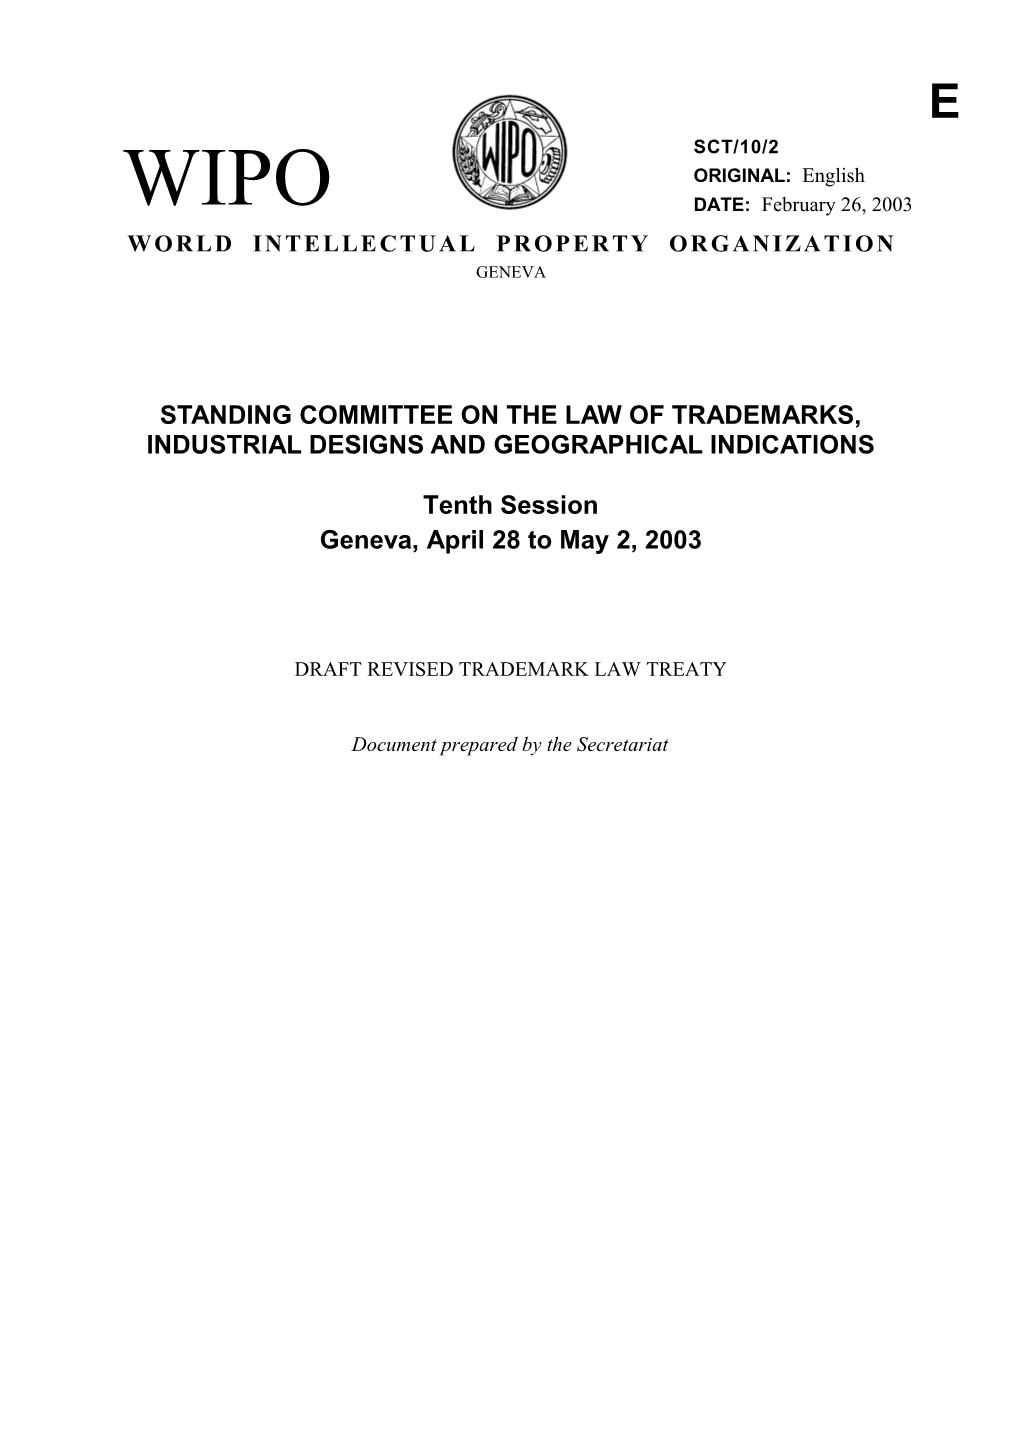 SCT/10/2: Draft Revised Trademark Law Treaty